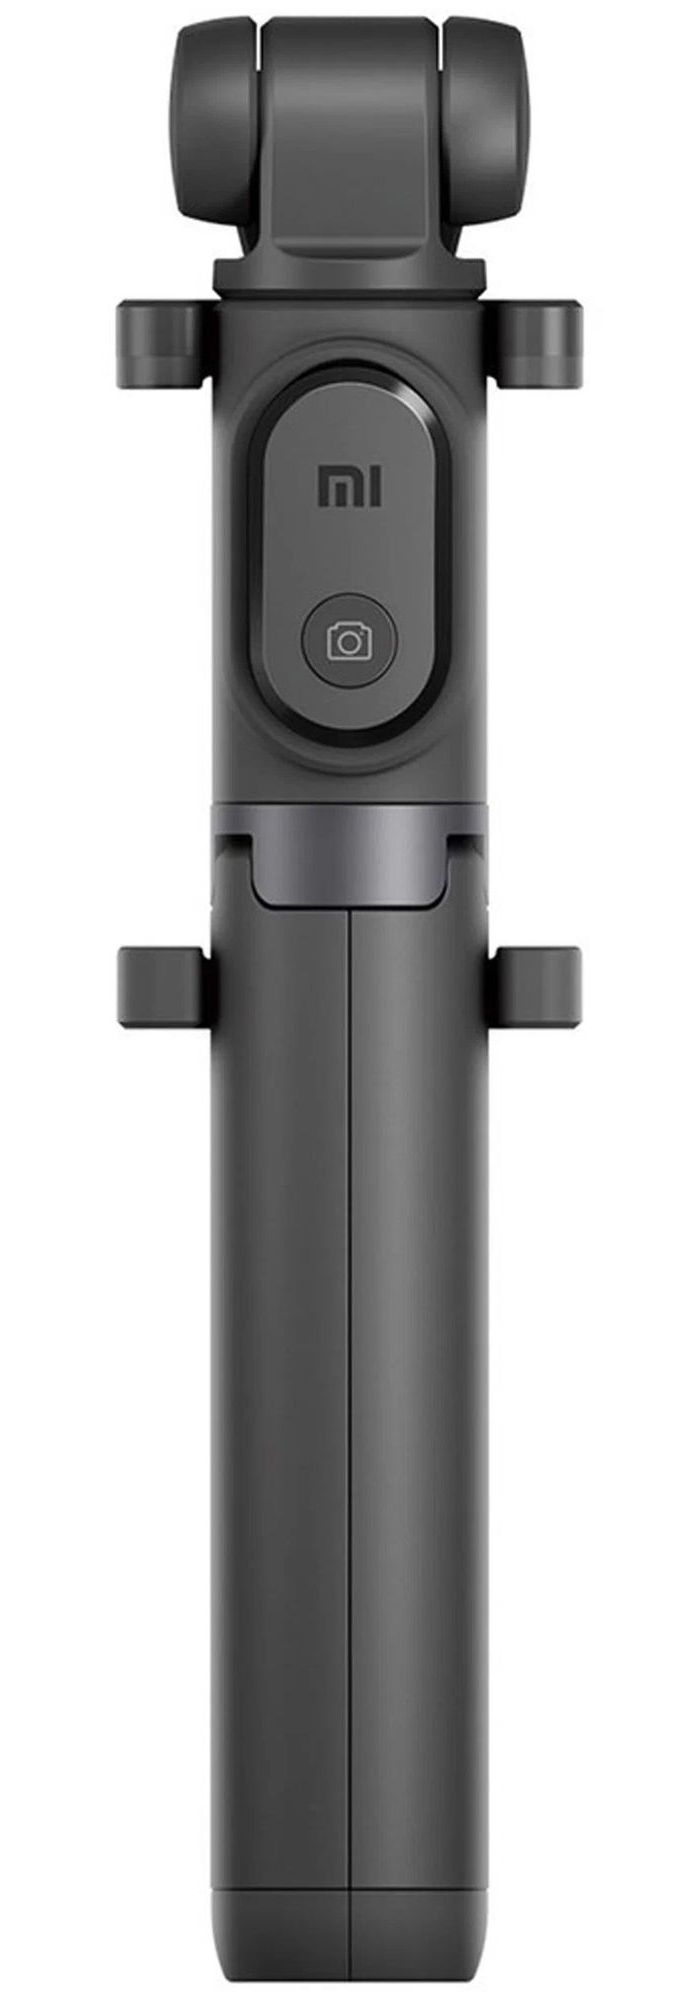 Монопод Xiaomi Mi Selfie Stick Tripod Black (XMZPG01YM) монопод xiaomi mi selfie stick tripod черный